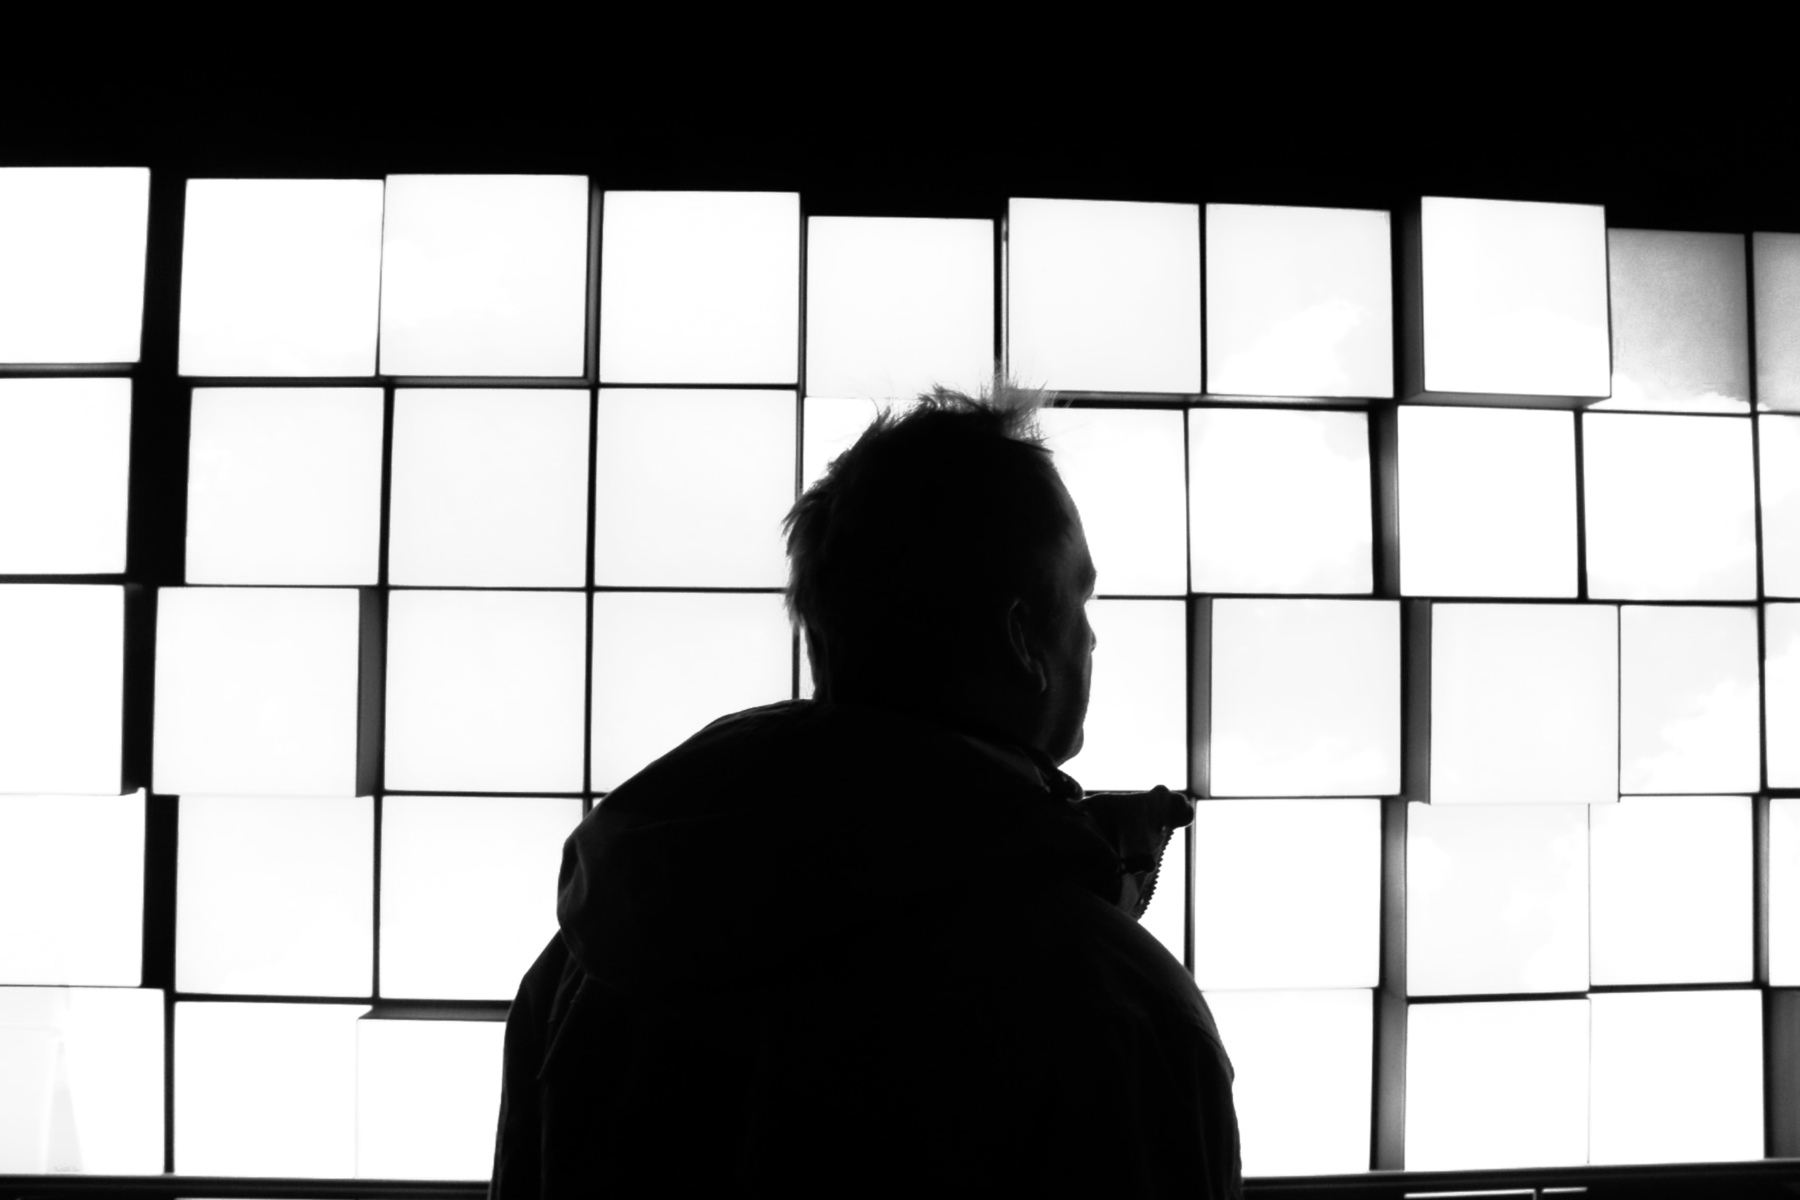 A silhouete man walking behind a row of tall windows.